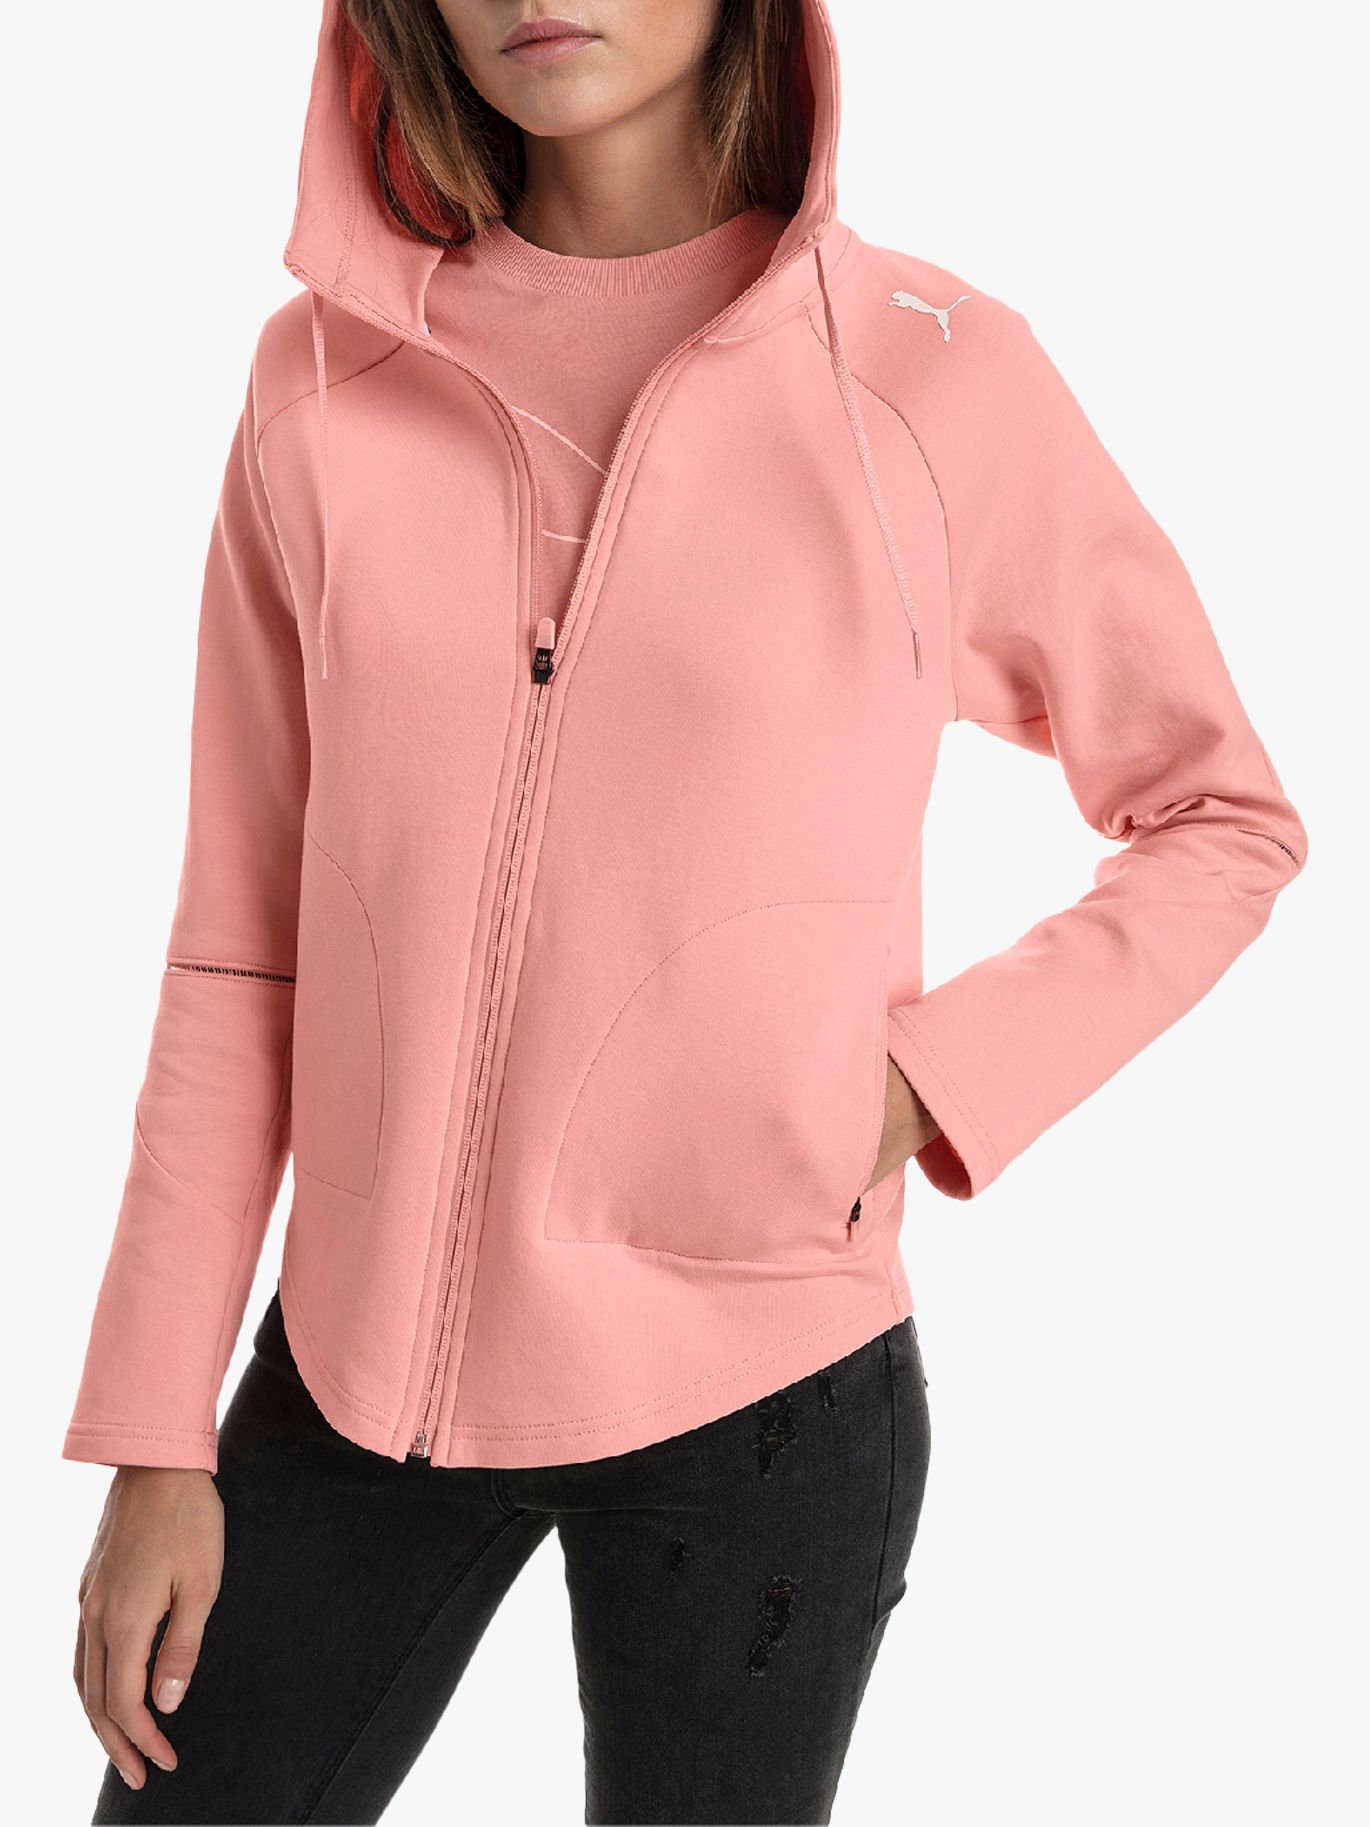 puma jacket pink